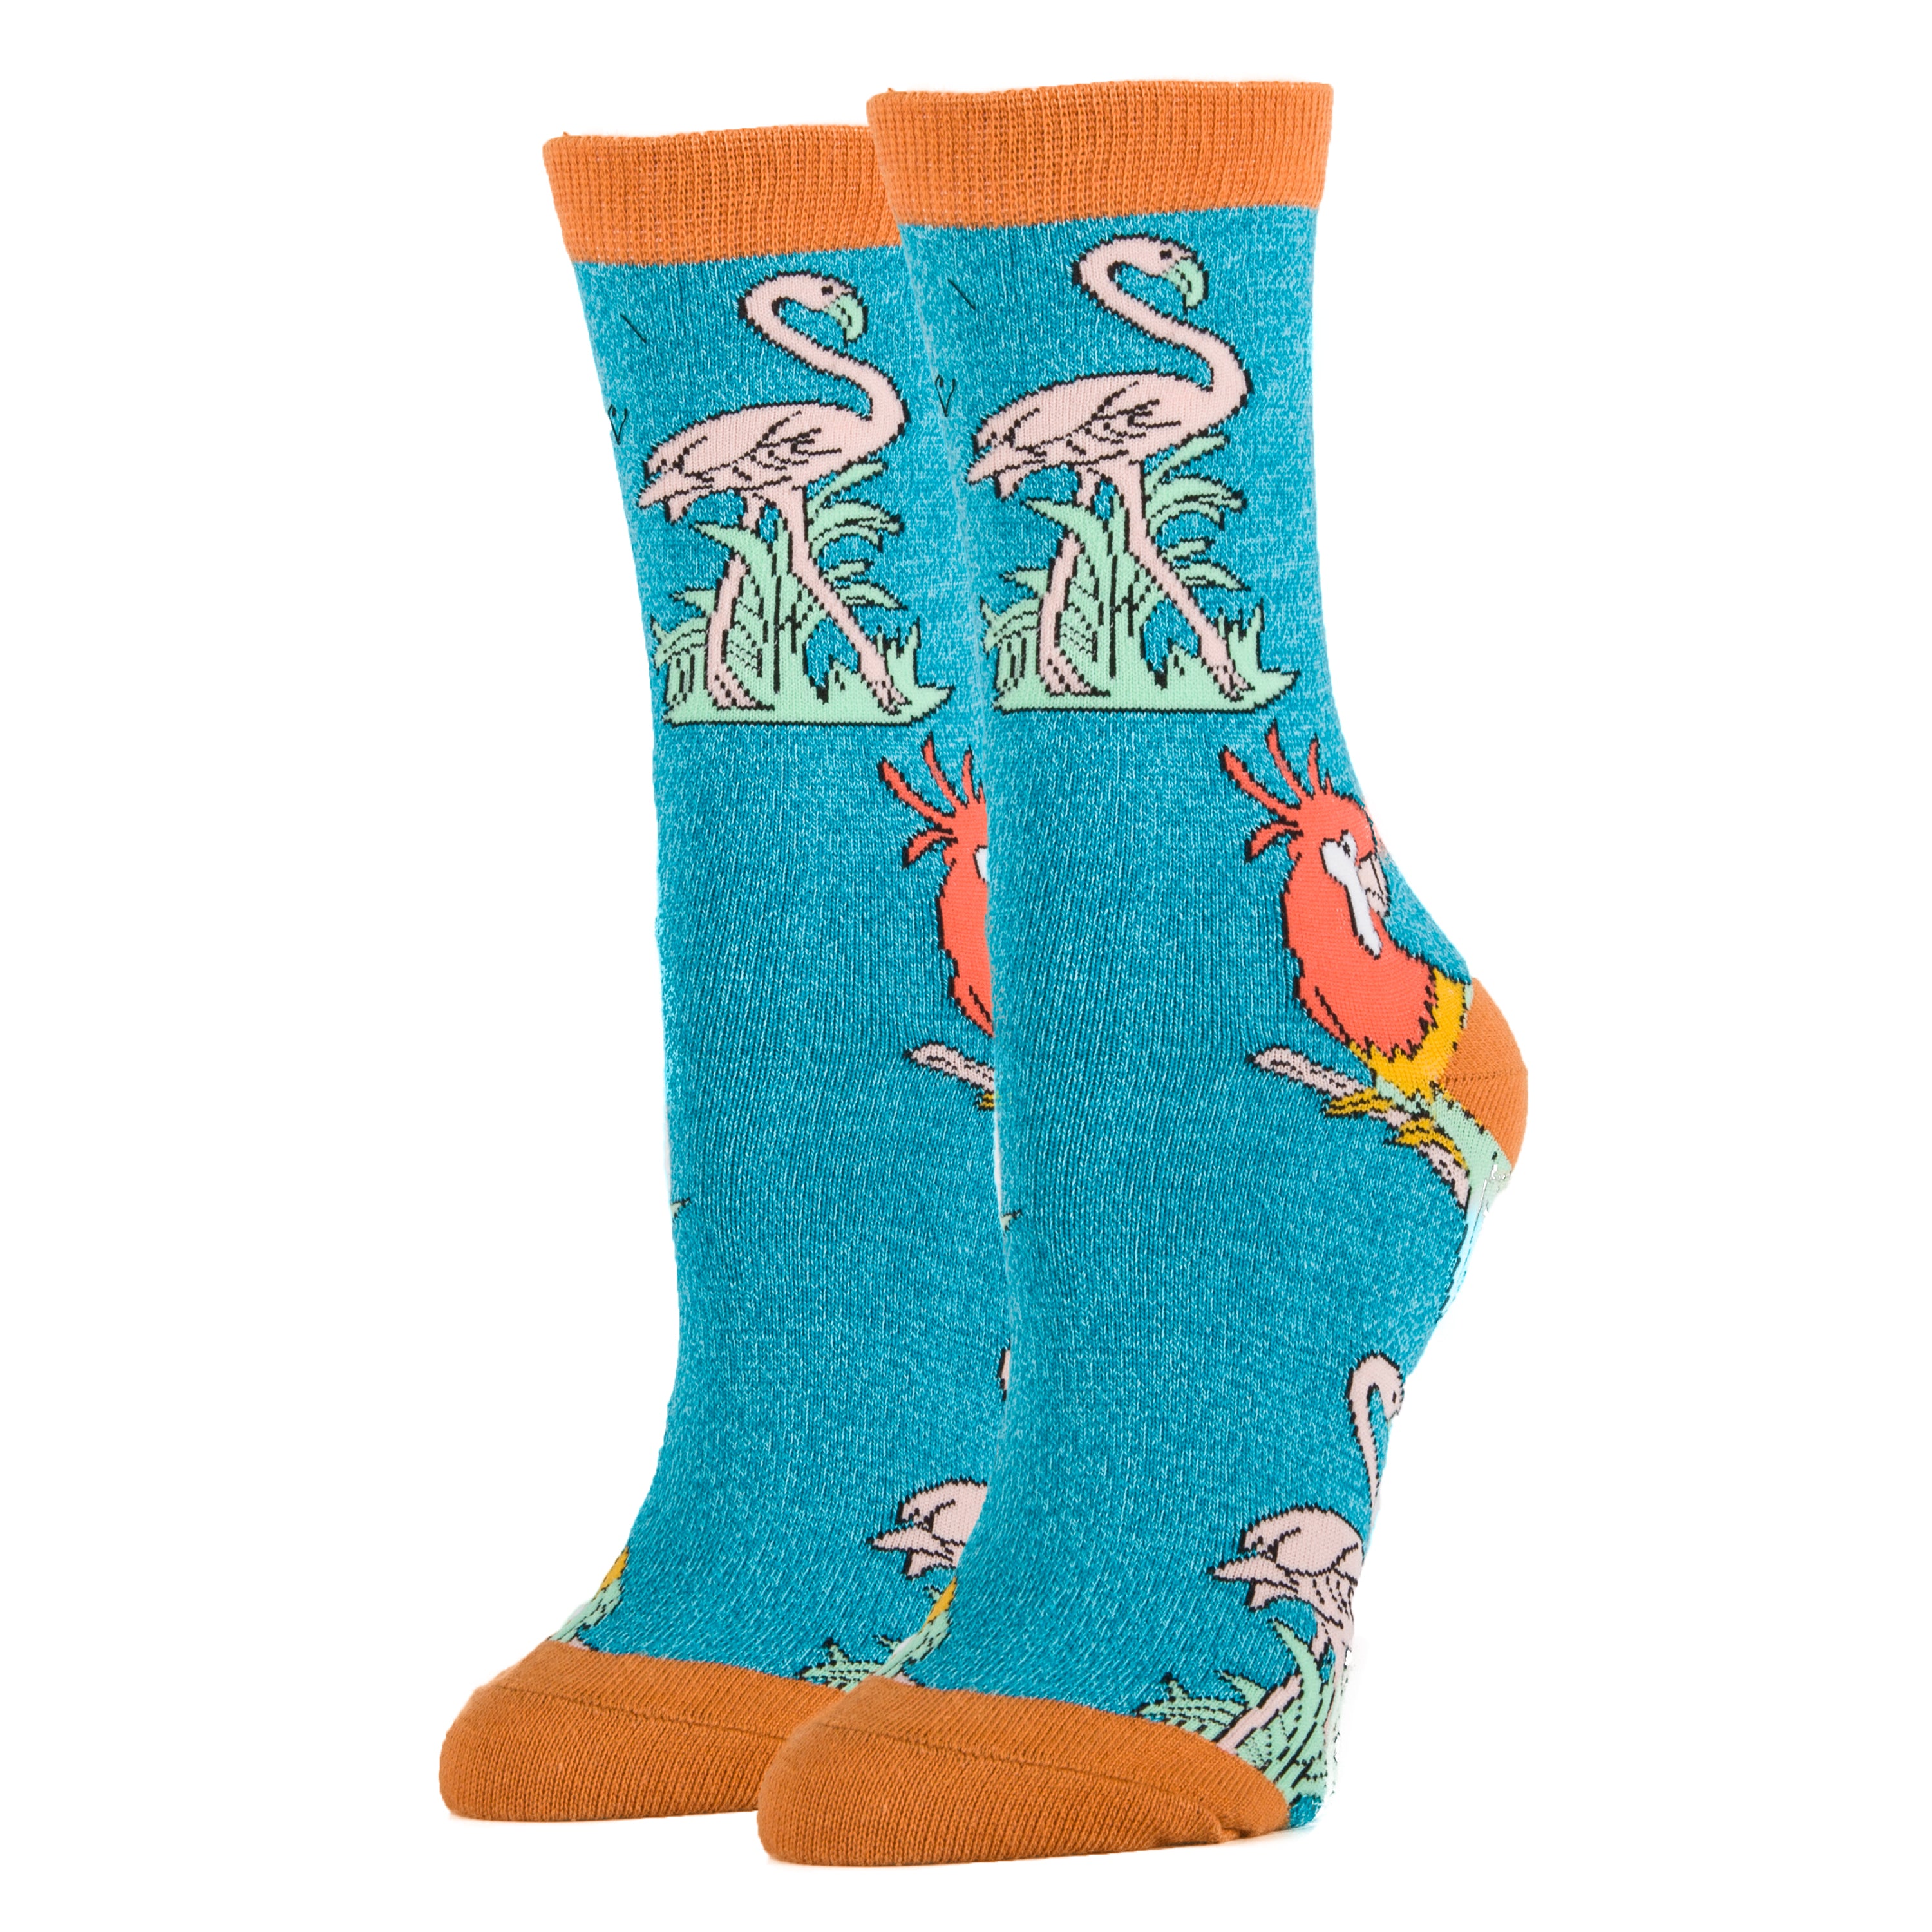 Tropical Birdy Socks | Novelty Crew Socks For Women